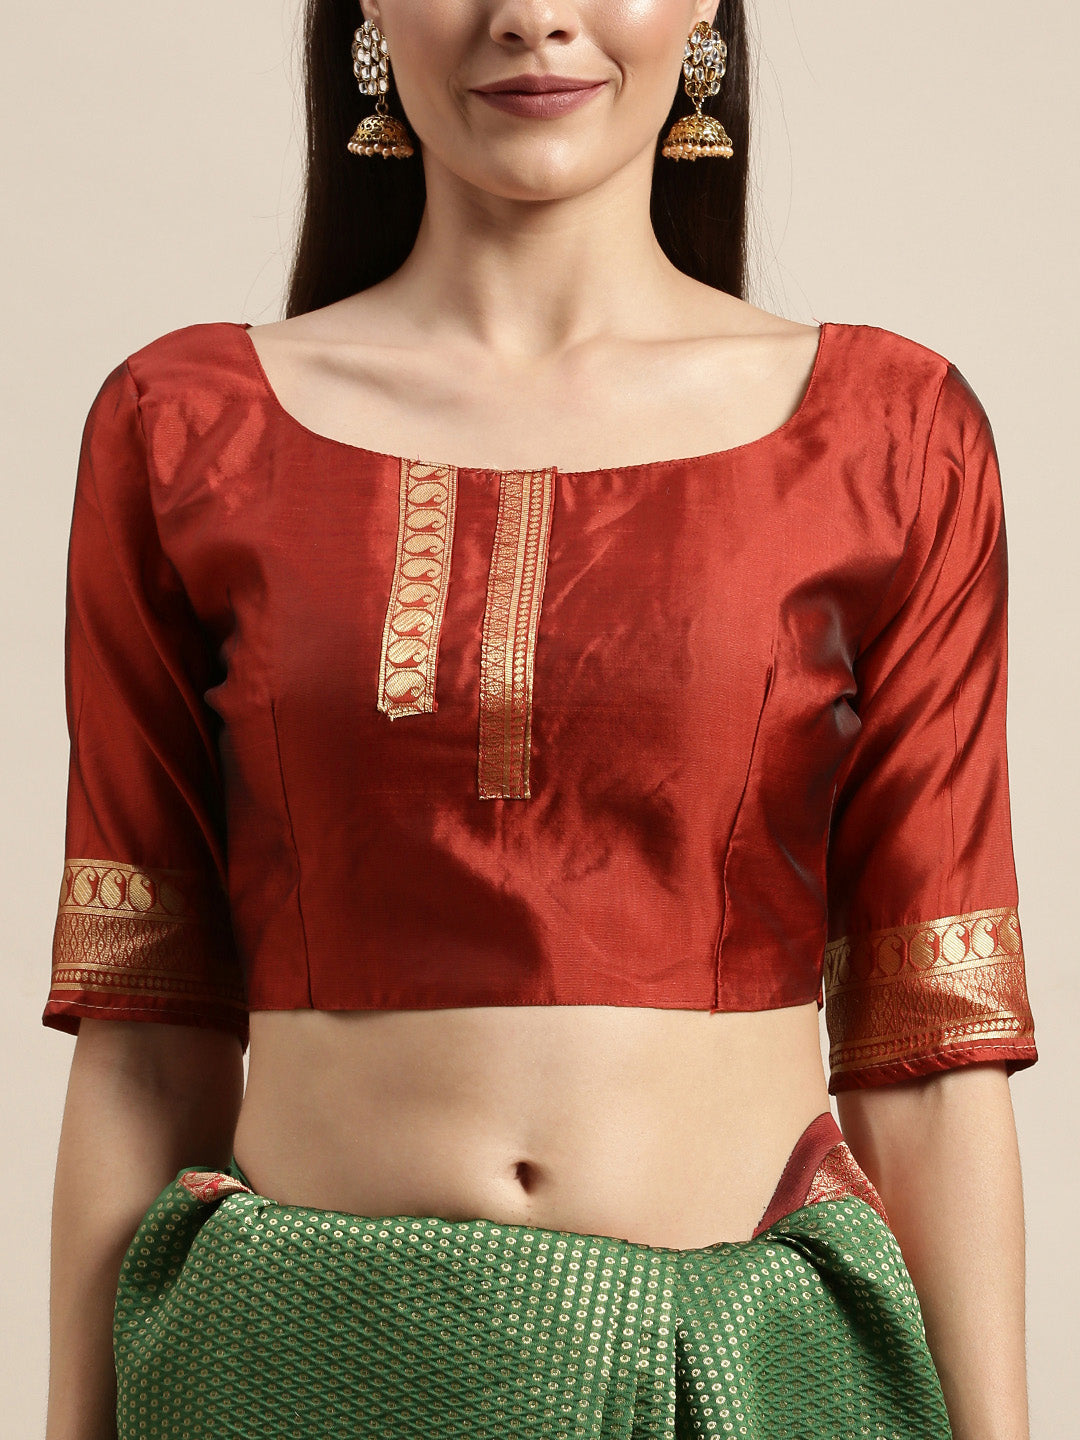 Admiring Green And Maroon Color Banarasi Silk Saree